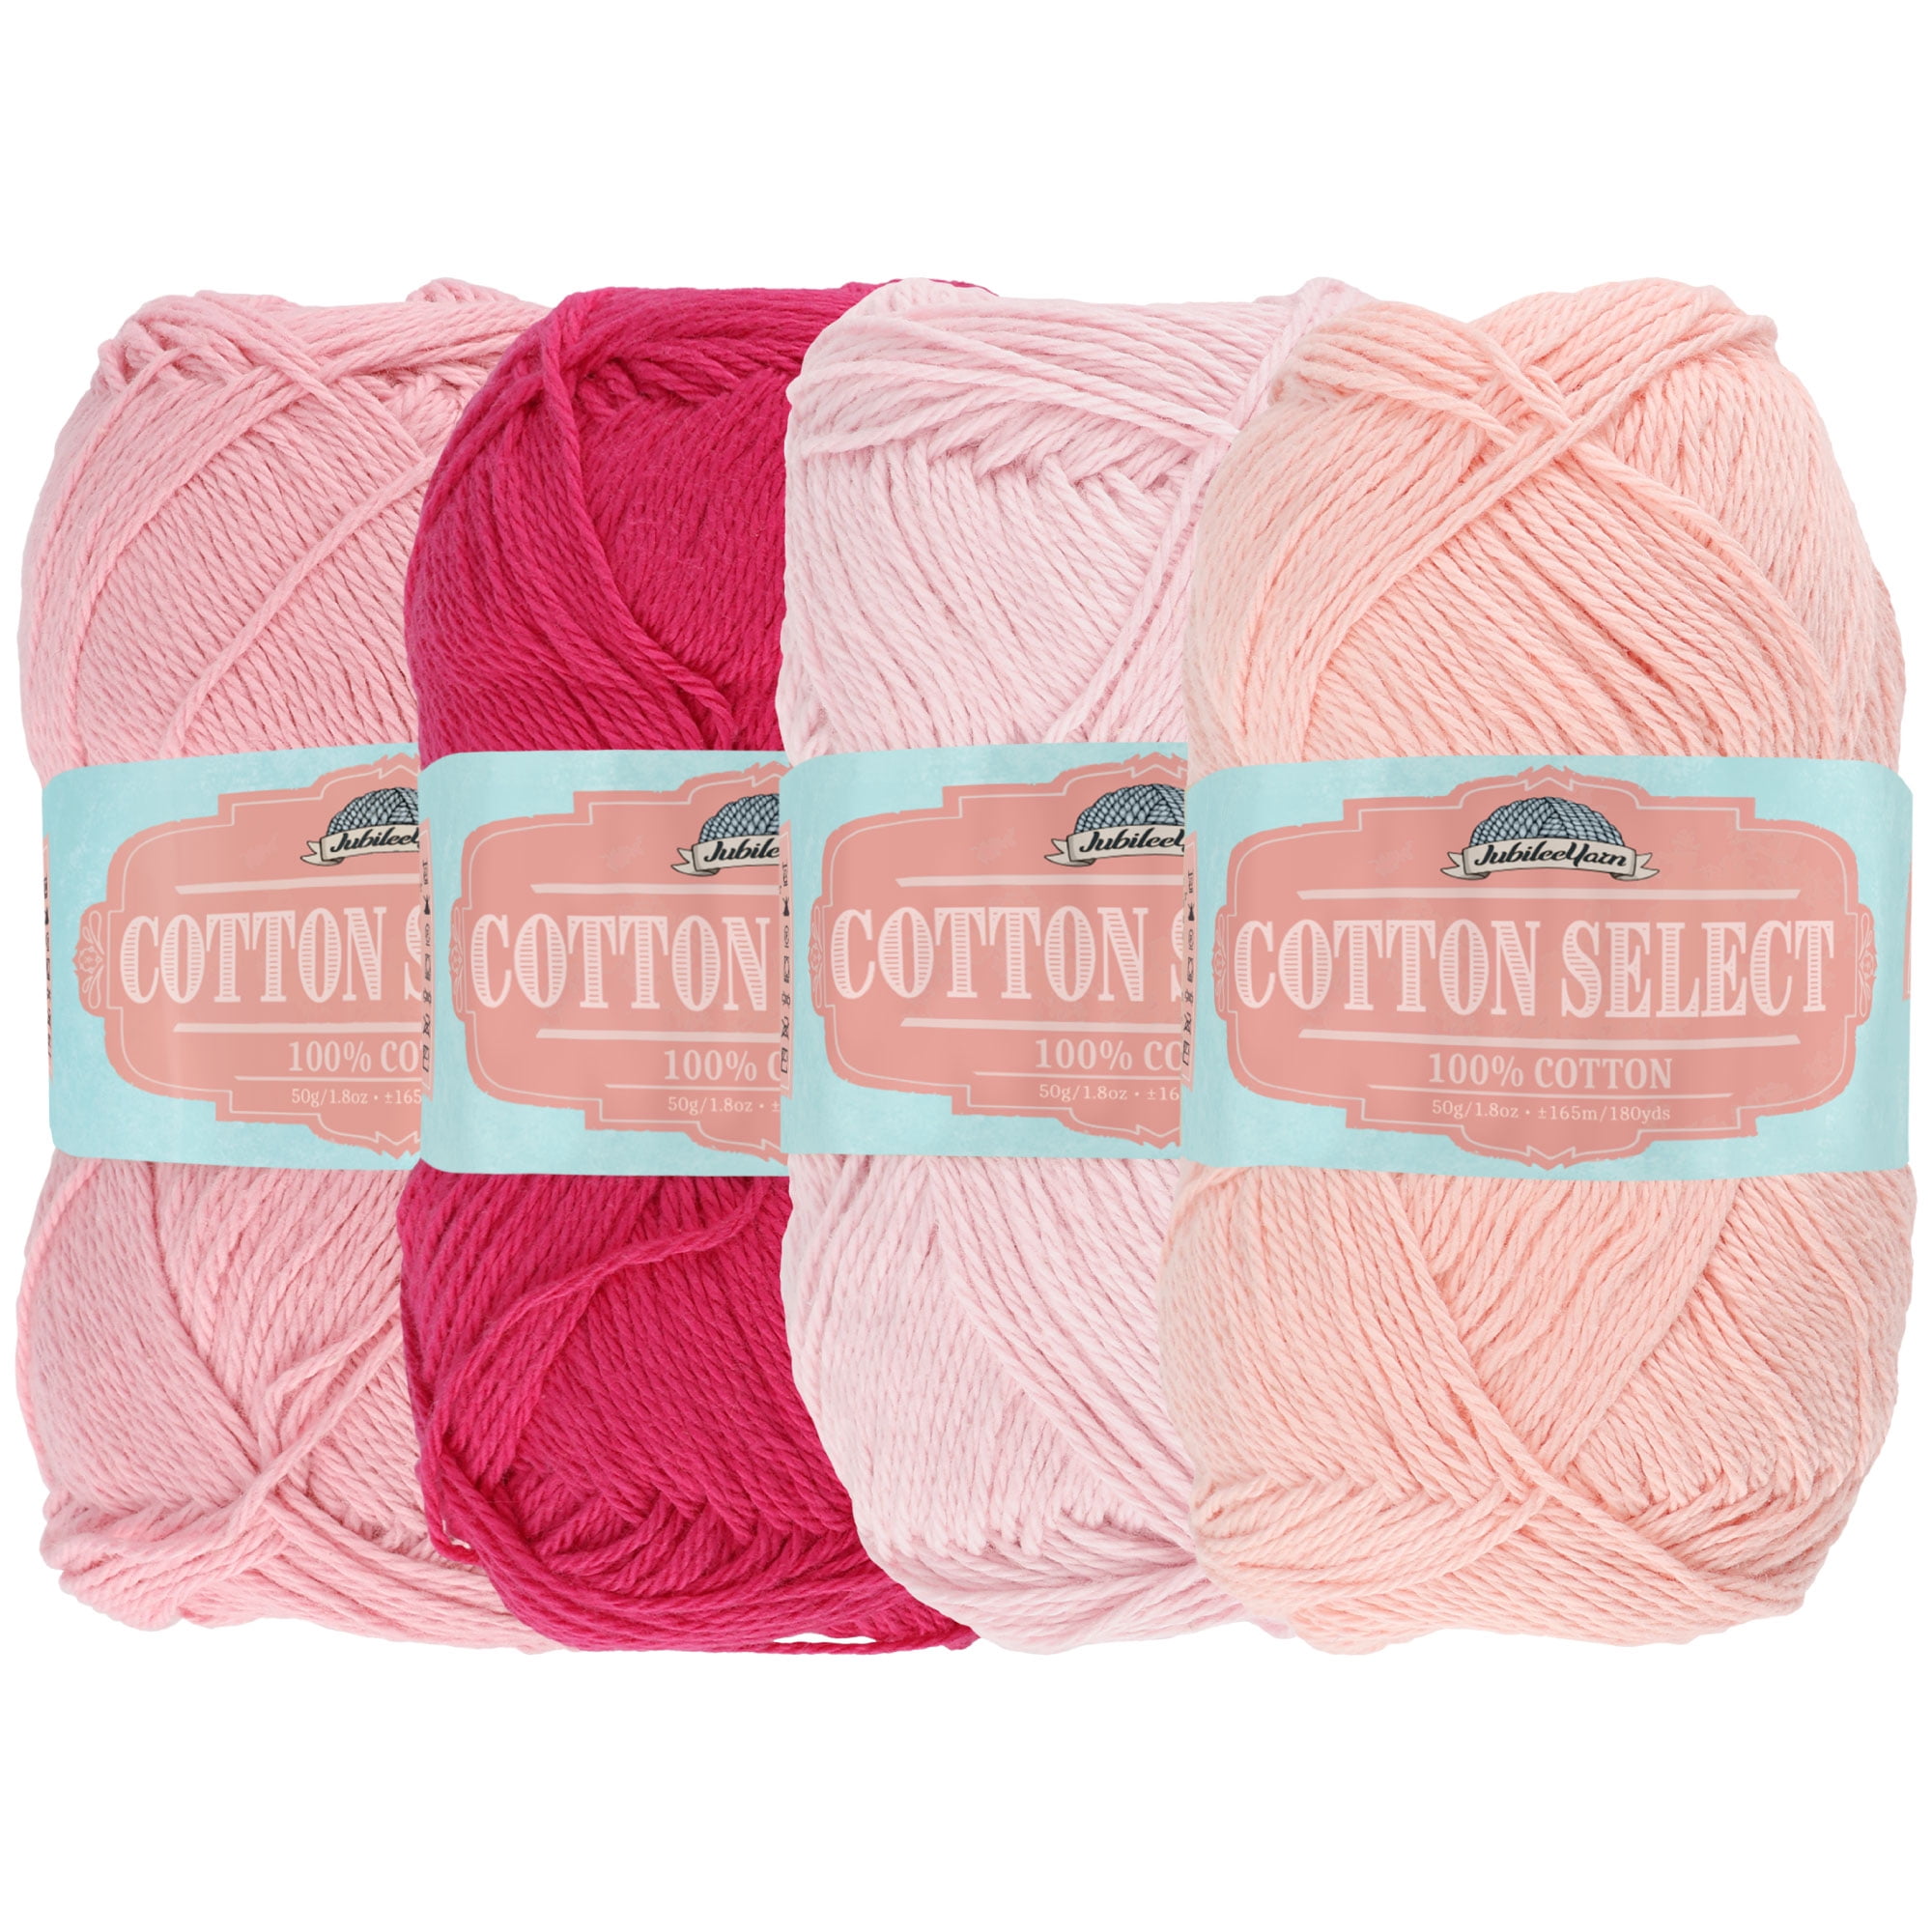 BambooMN Cotton Select Yarn - Shades of Pink (200g/720yds) - 2